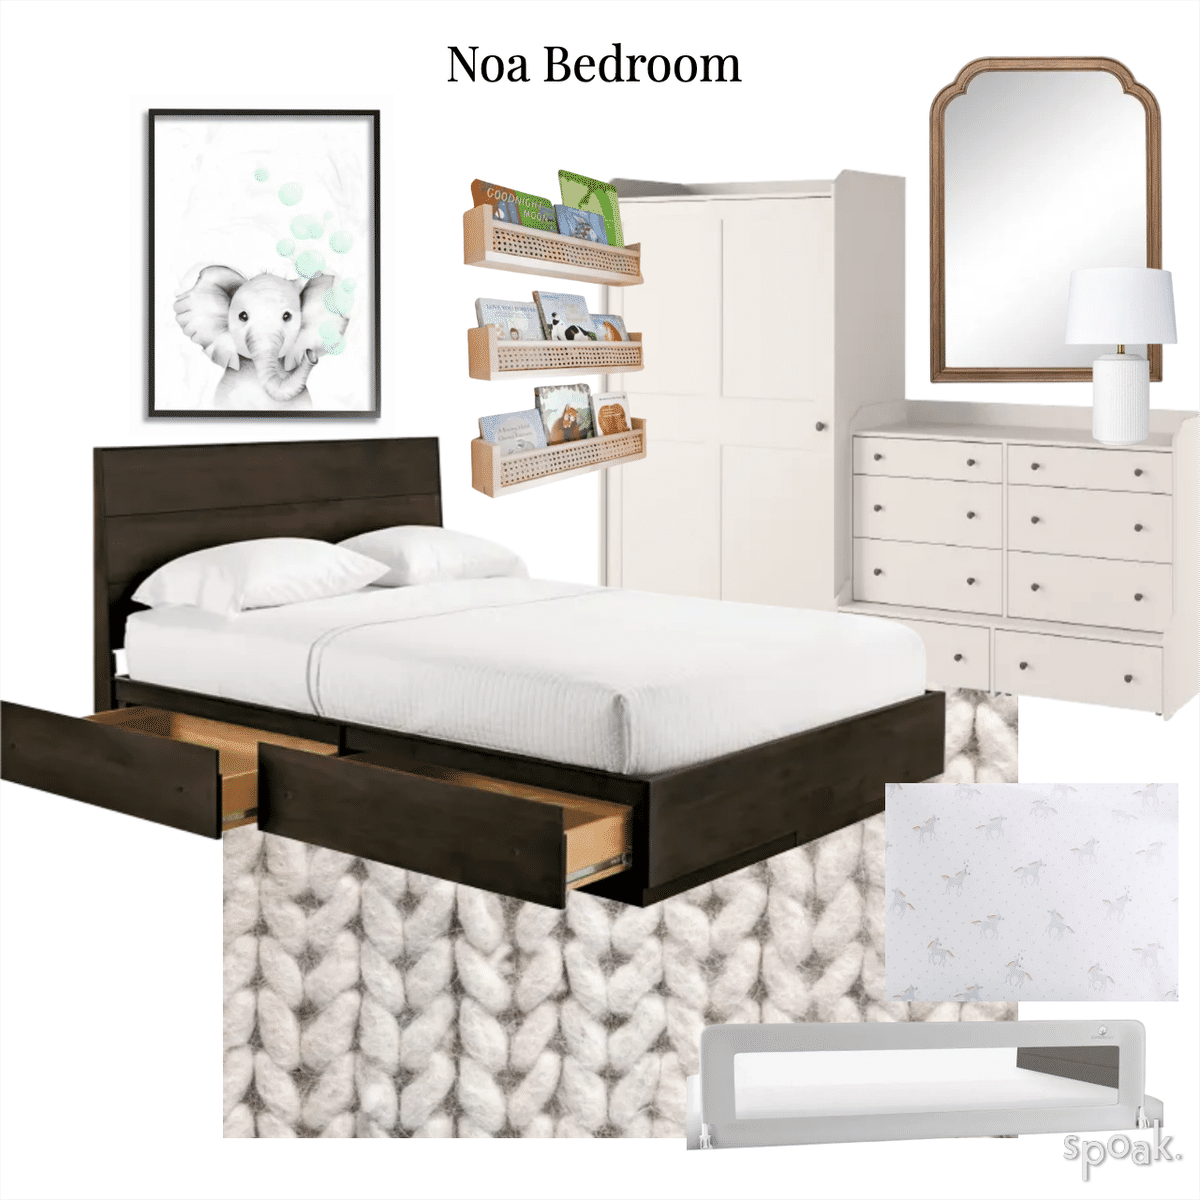 Noa Bedroom Mood Board designed by Gabrielle Rahimi